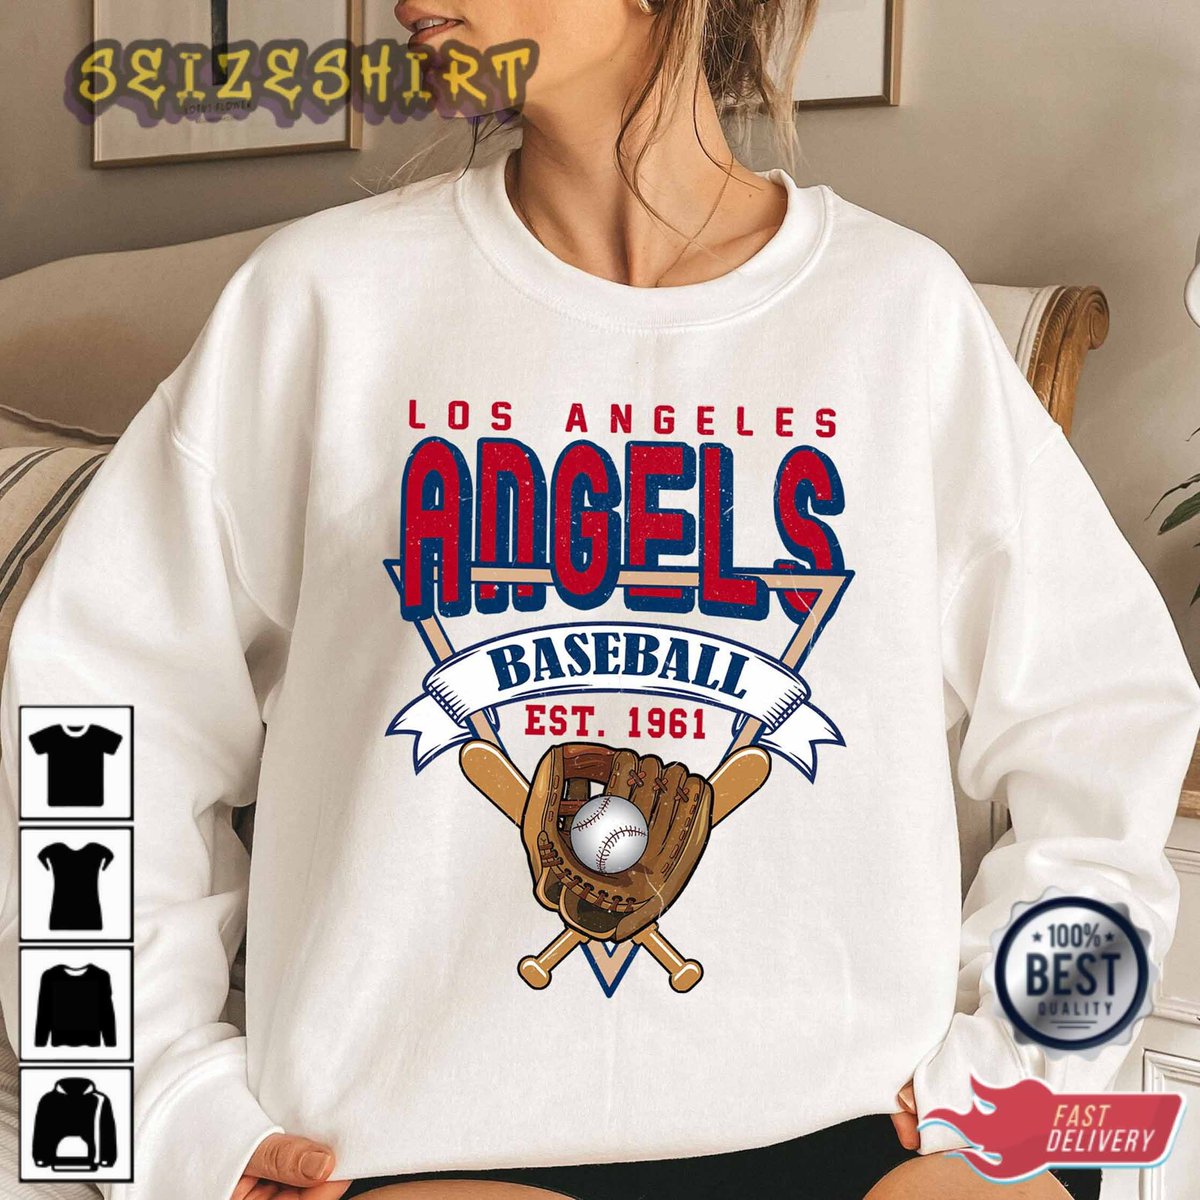 Los Angeles Angels Vintage Shirt 
seizeshirt.com/angels-los-ang… 
#LosAngelesAngels #RepTheHalo #LAA #MLB #Baseball #Trending #Seizeshirt